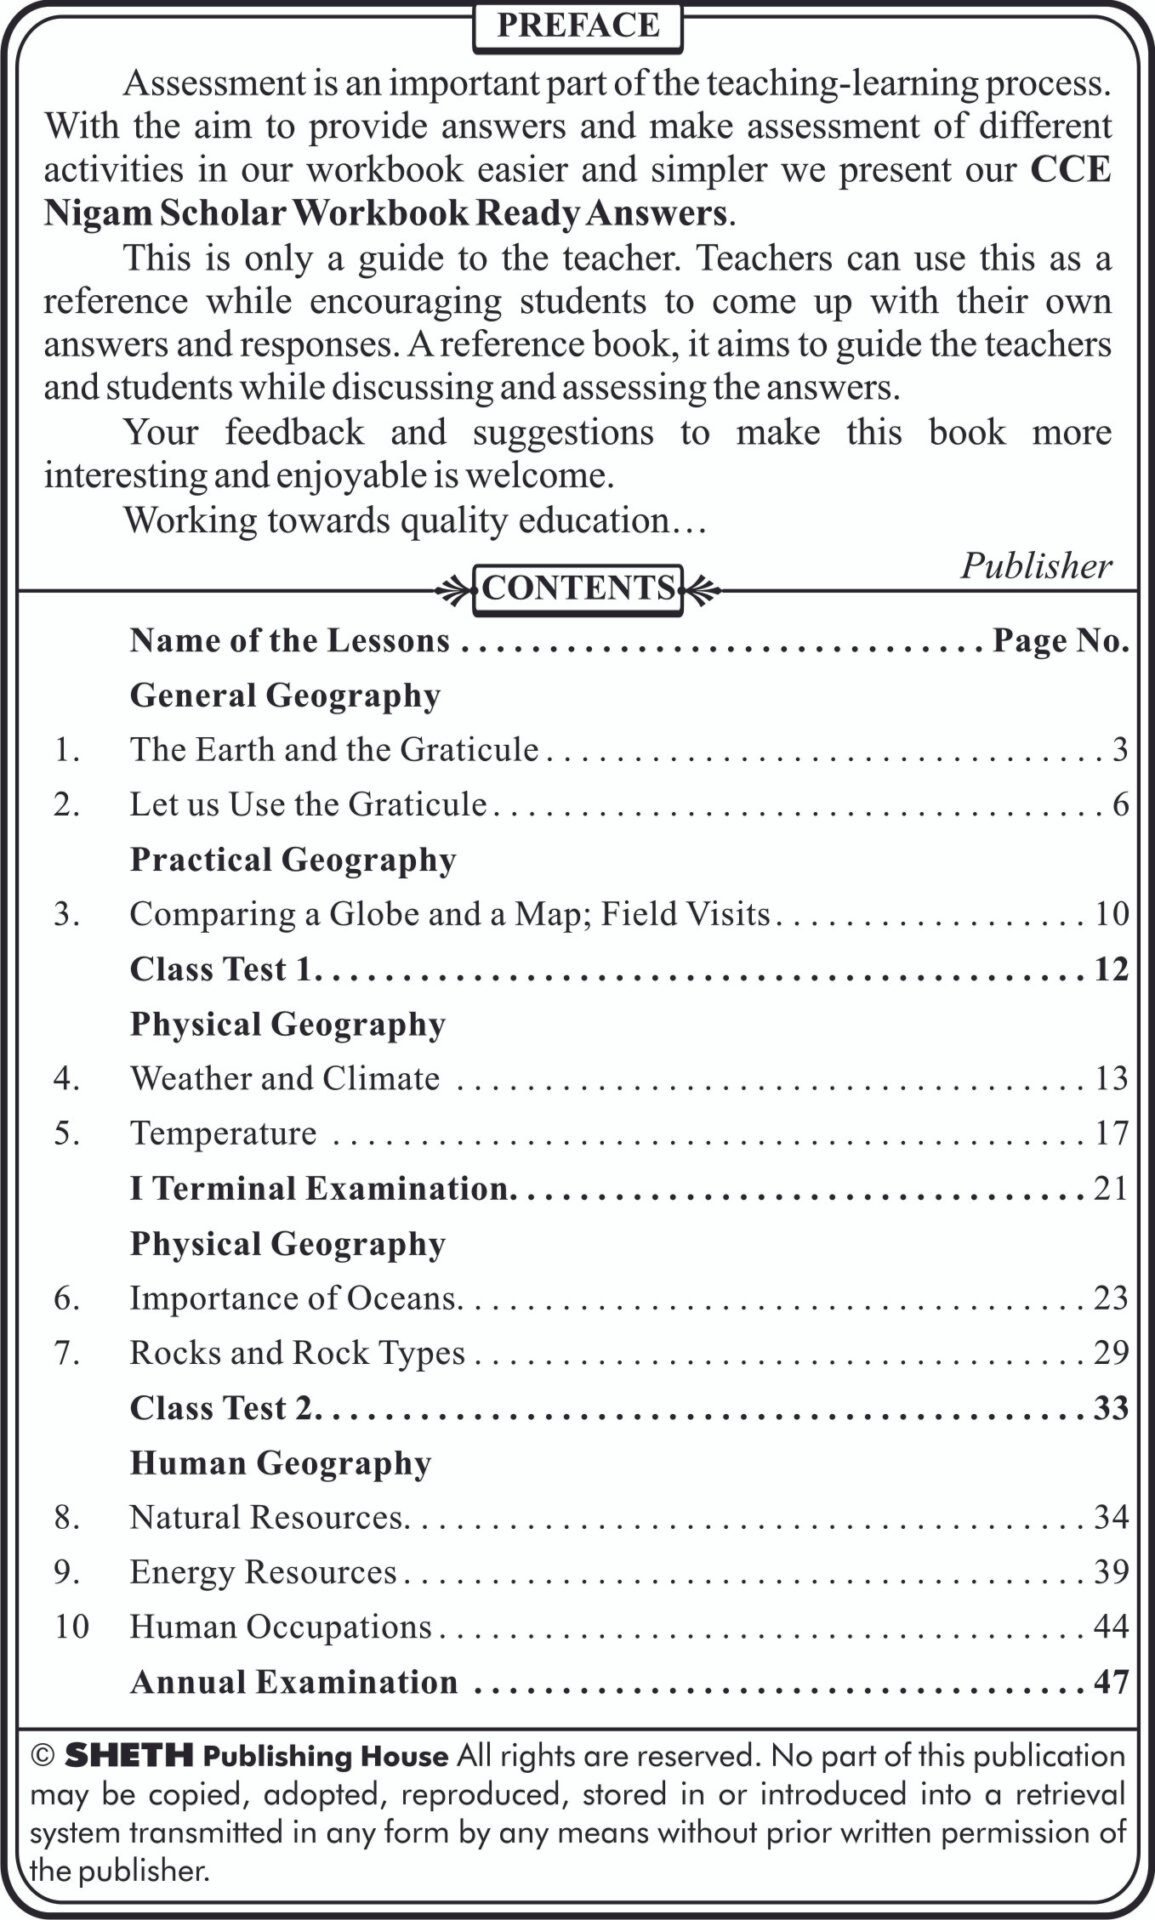 Nigam CCE Scholar Workbooks Ready Answers Geography Standard 6 2